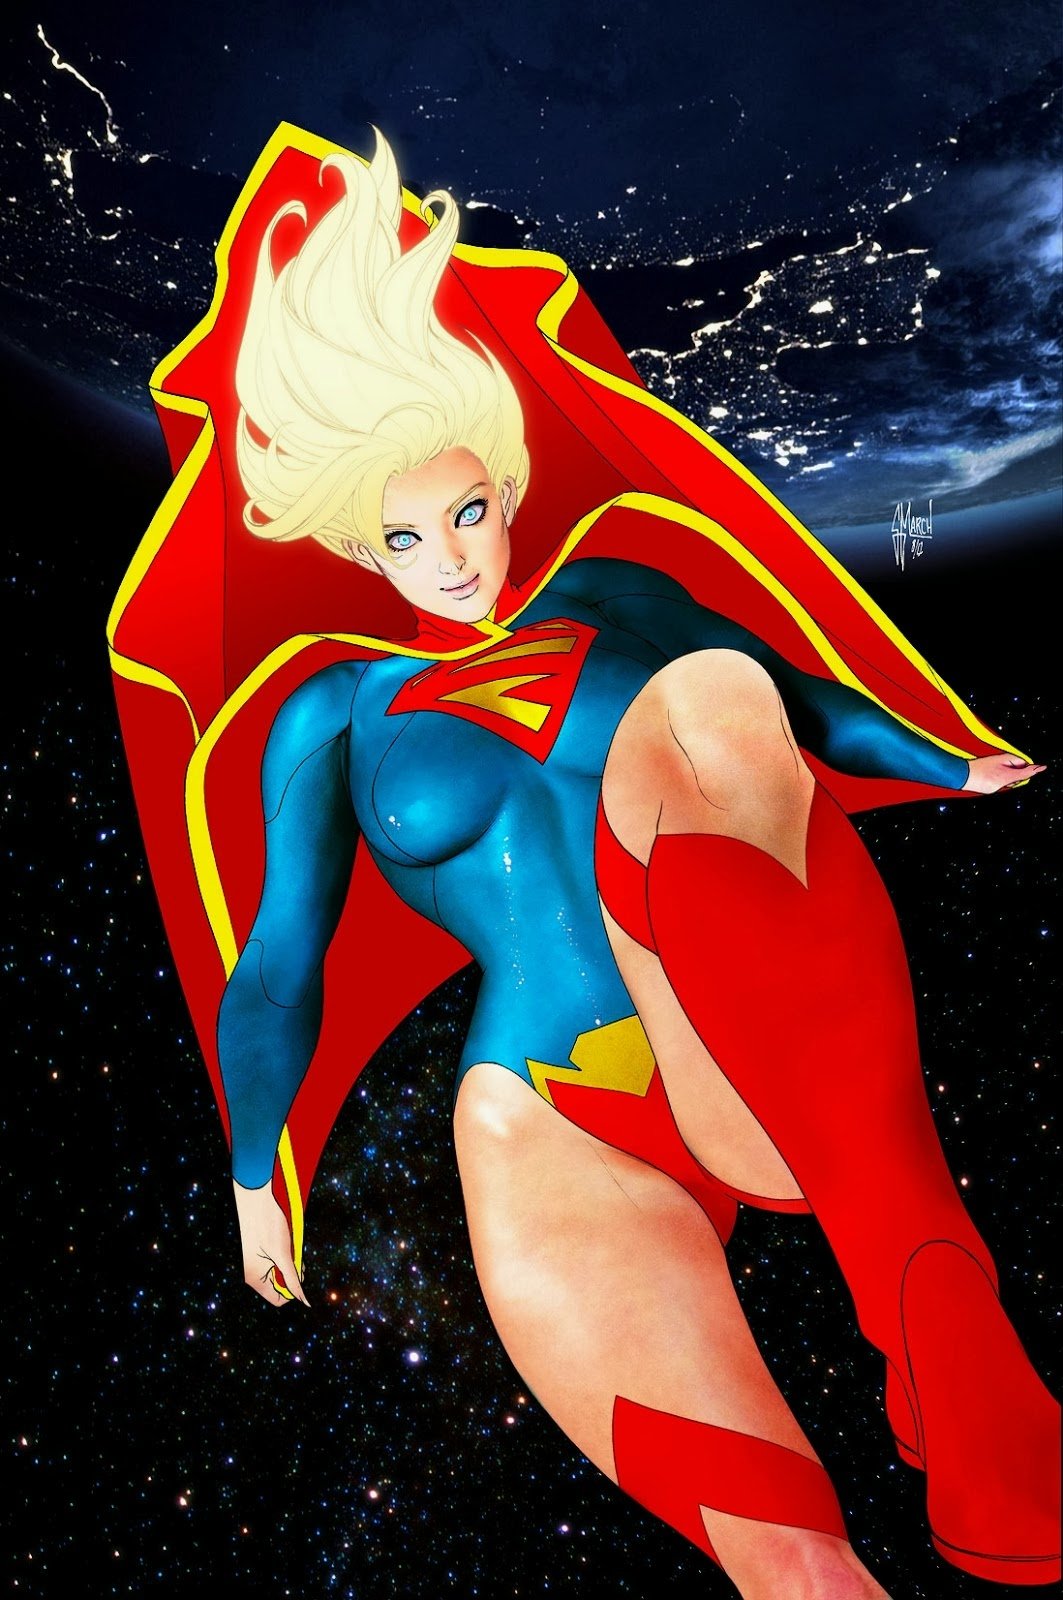 Supergirl Art - ID: 56371 - Art Abyss